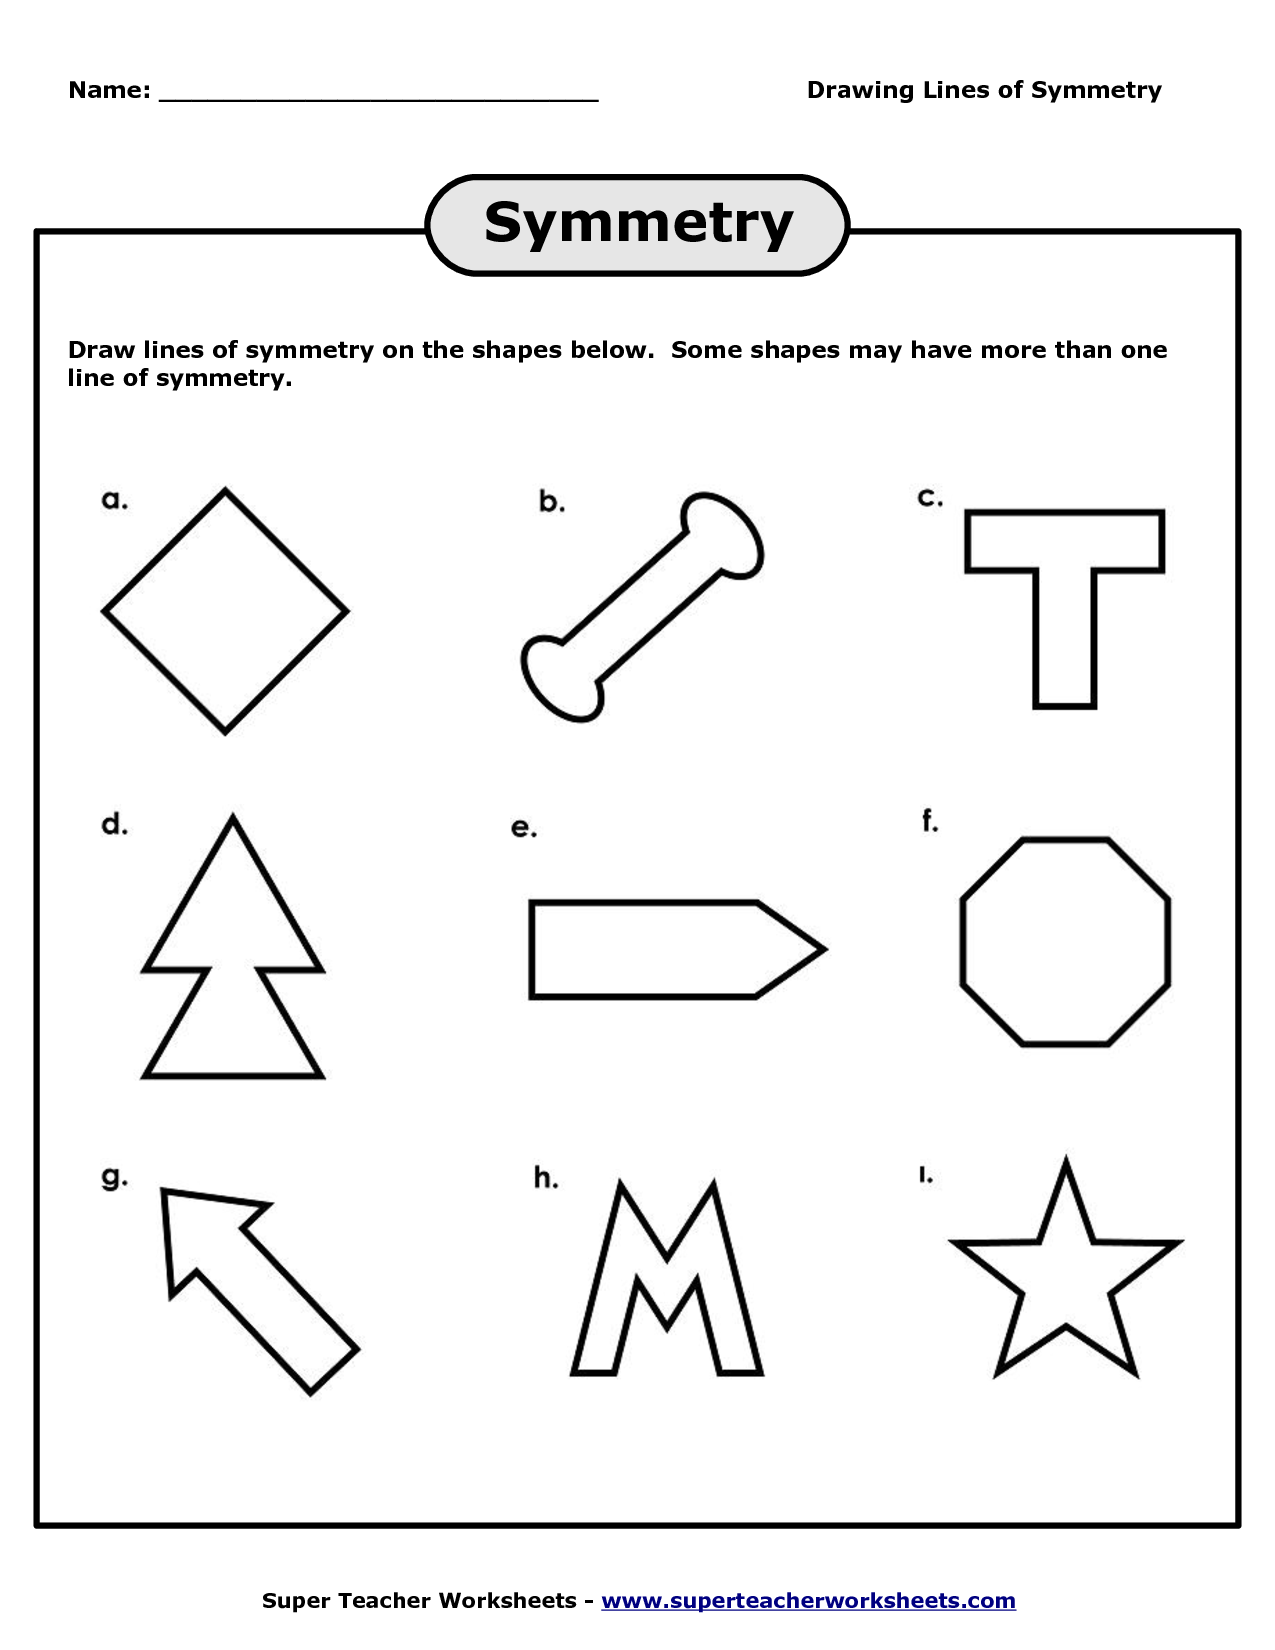 Draw Lines of Symmetry Worksheet